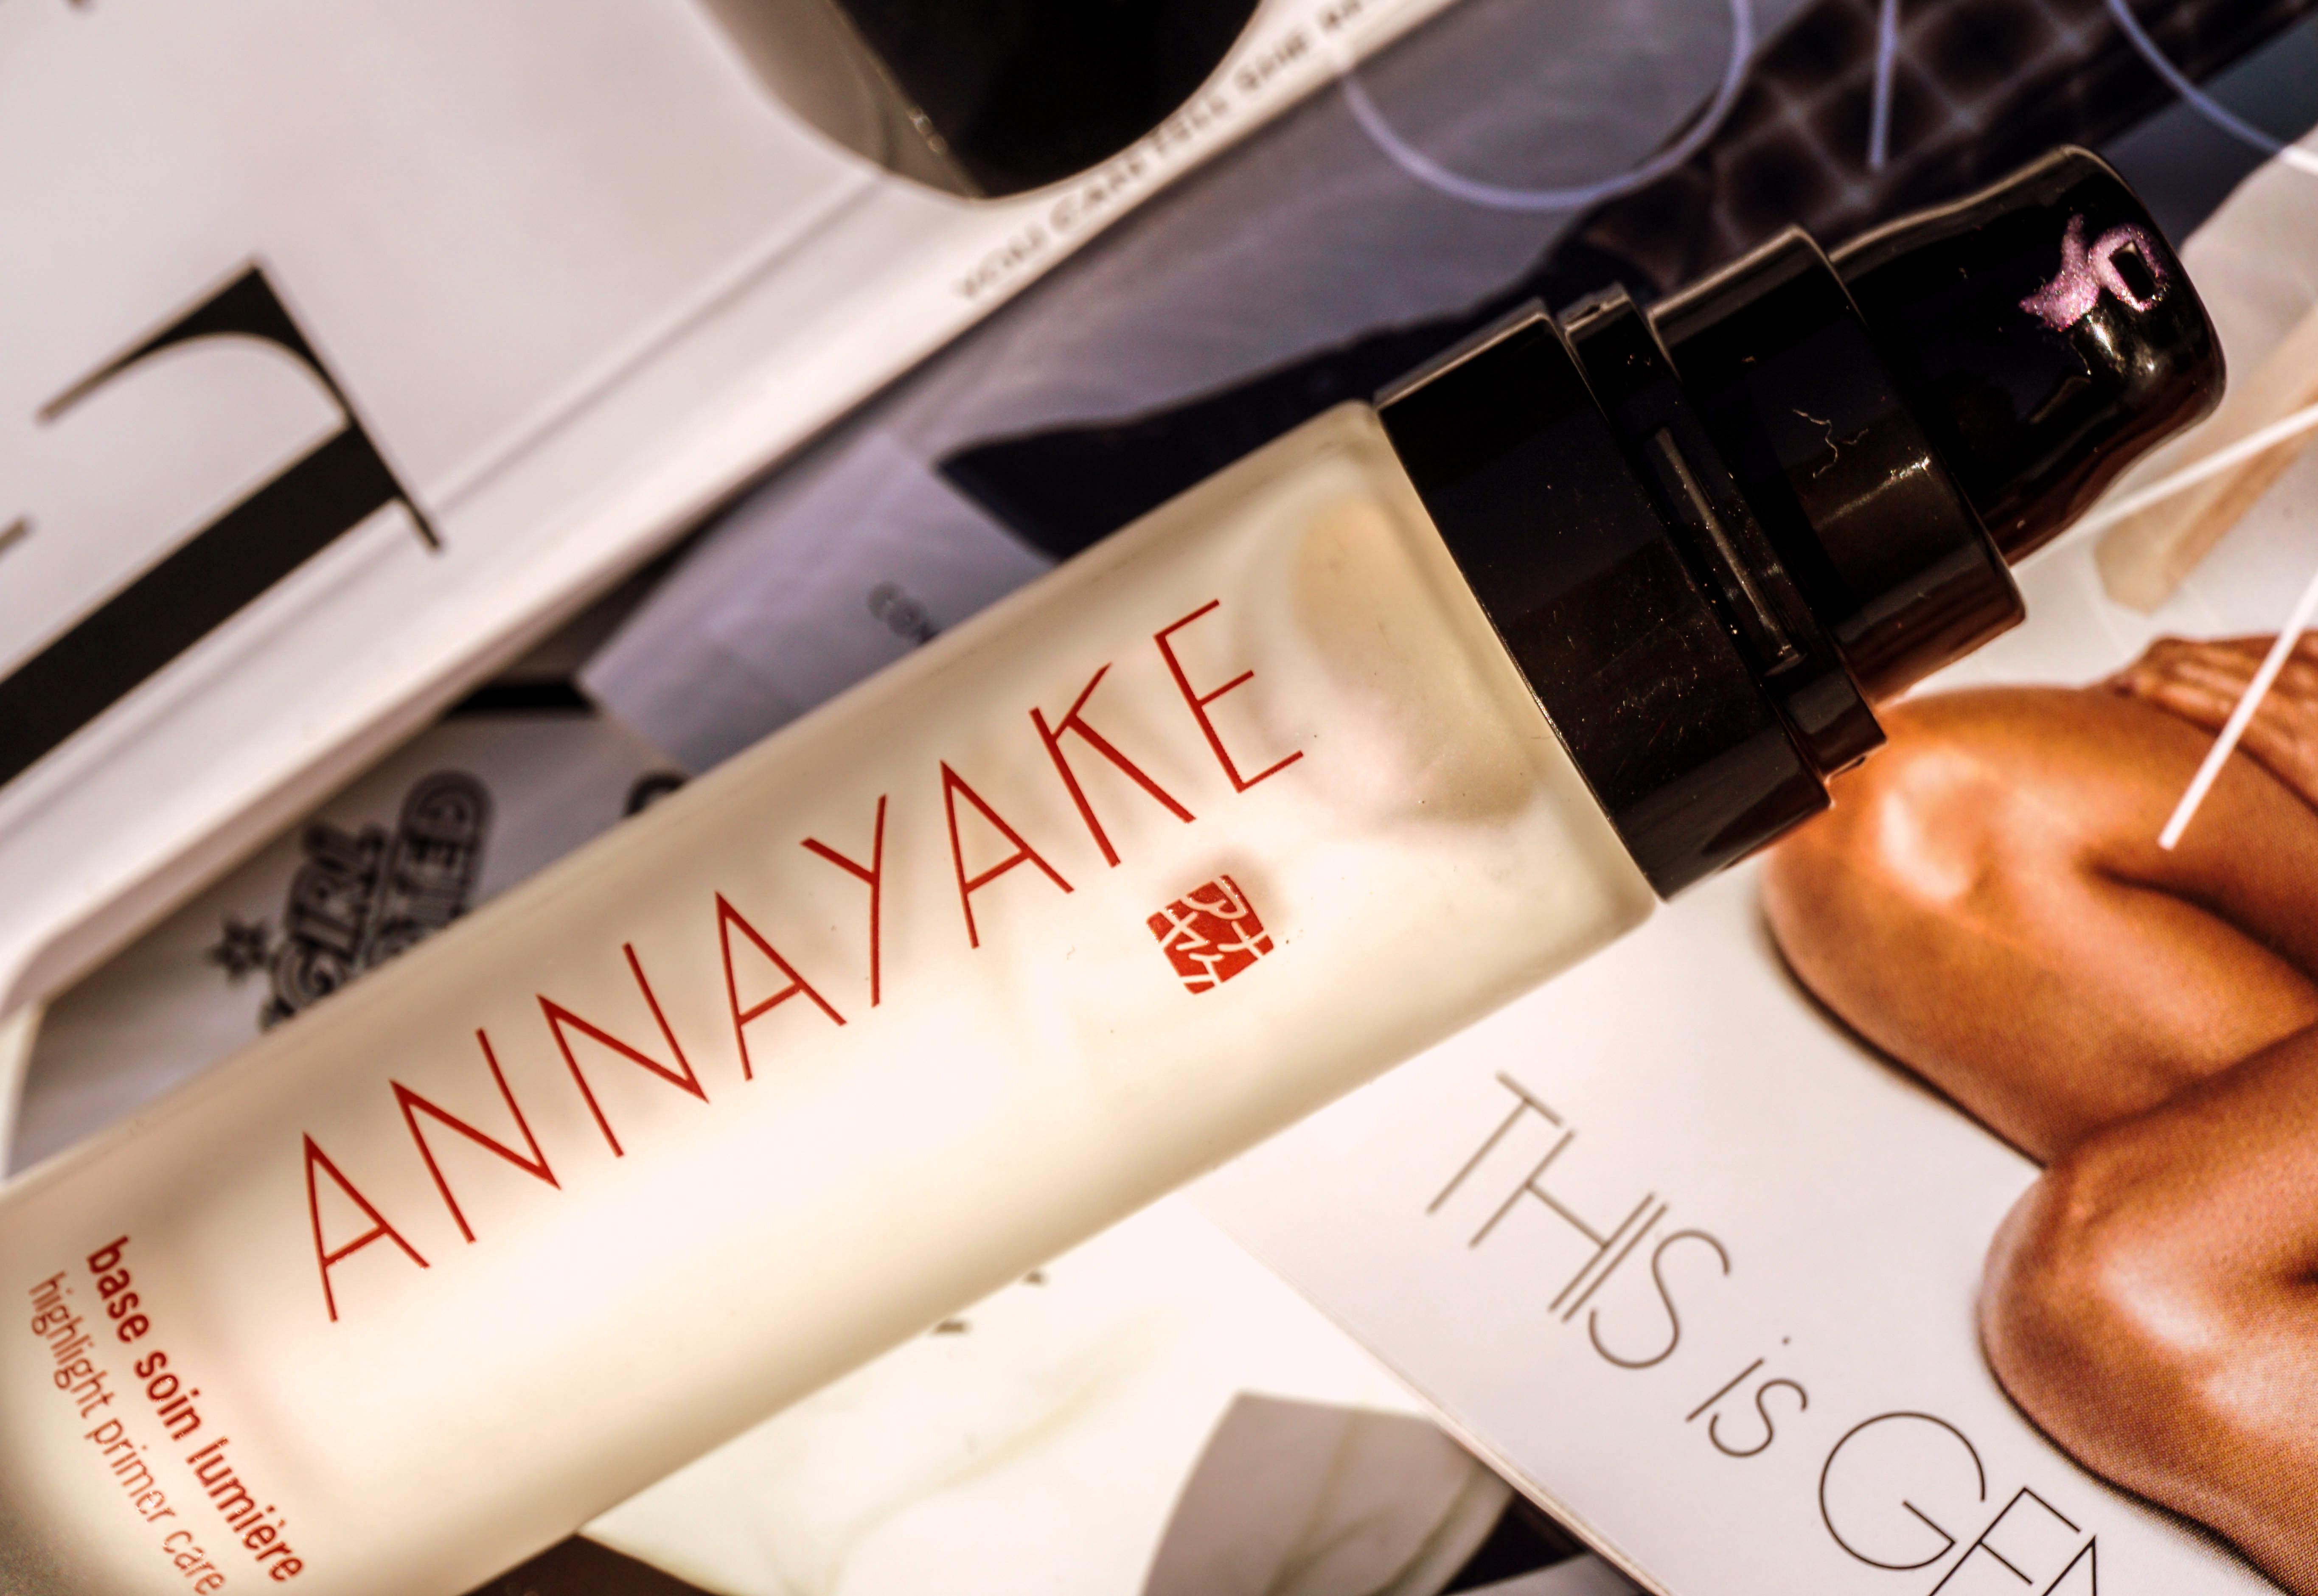 ANNAYAKE Lumière Highlight Care Primer & Eyeshadow Primer & Perfecting Powder - Highendlove